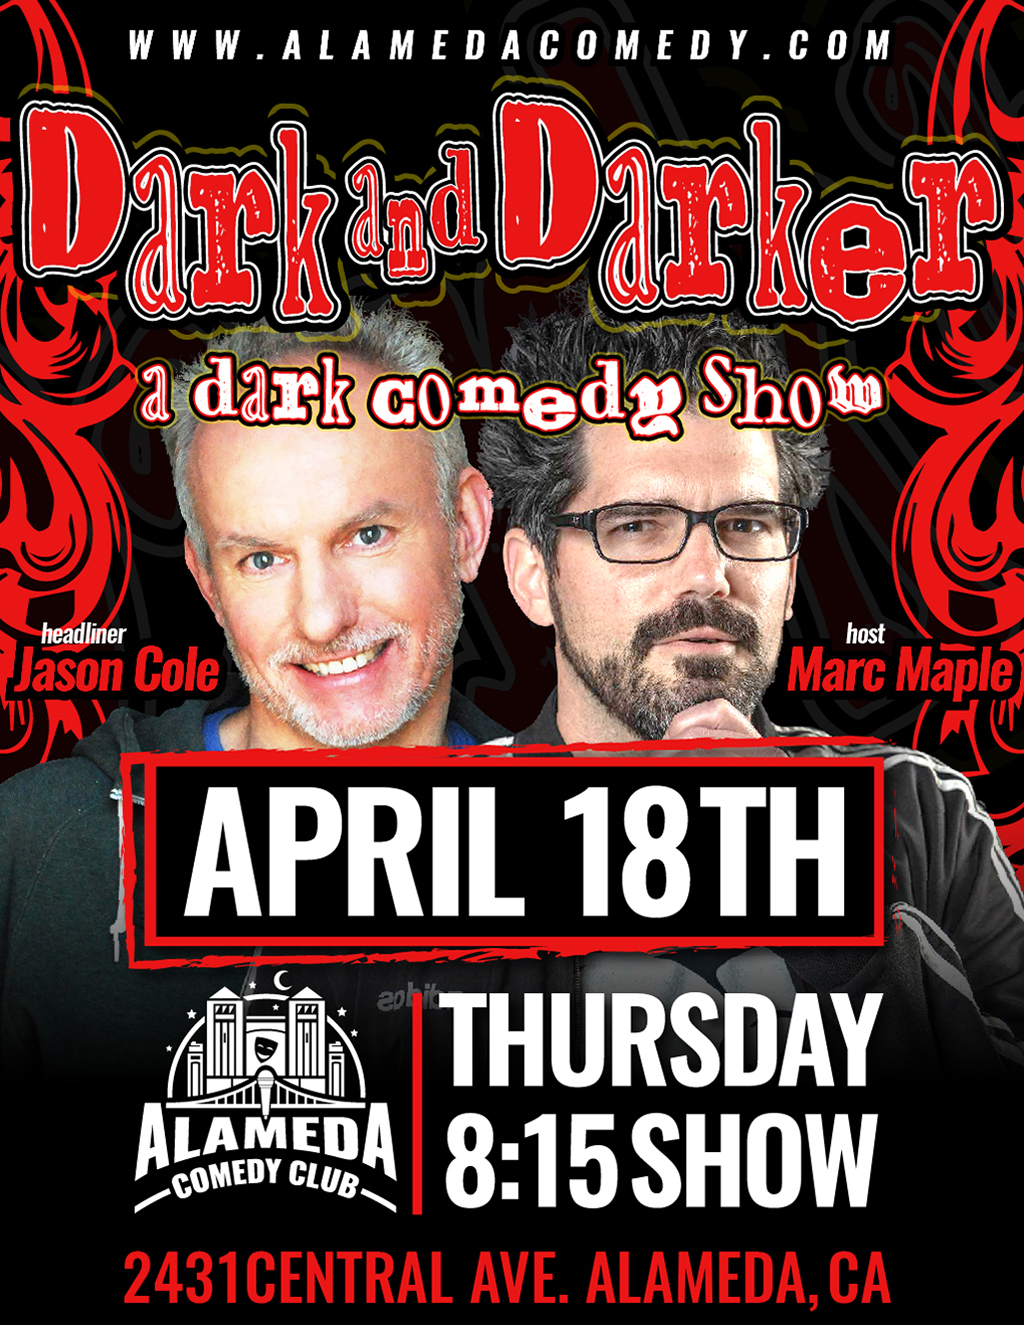 Alameda Comedy Club A Dark Comedy Show Headlined by Jason Cole at Alameda Comedy Club promotion flier on Digifli com